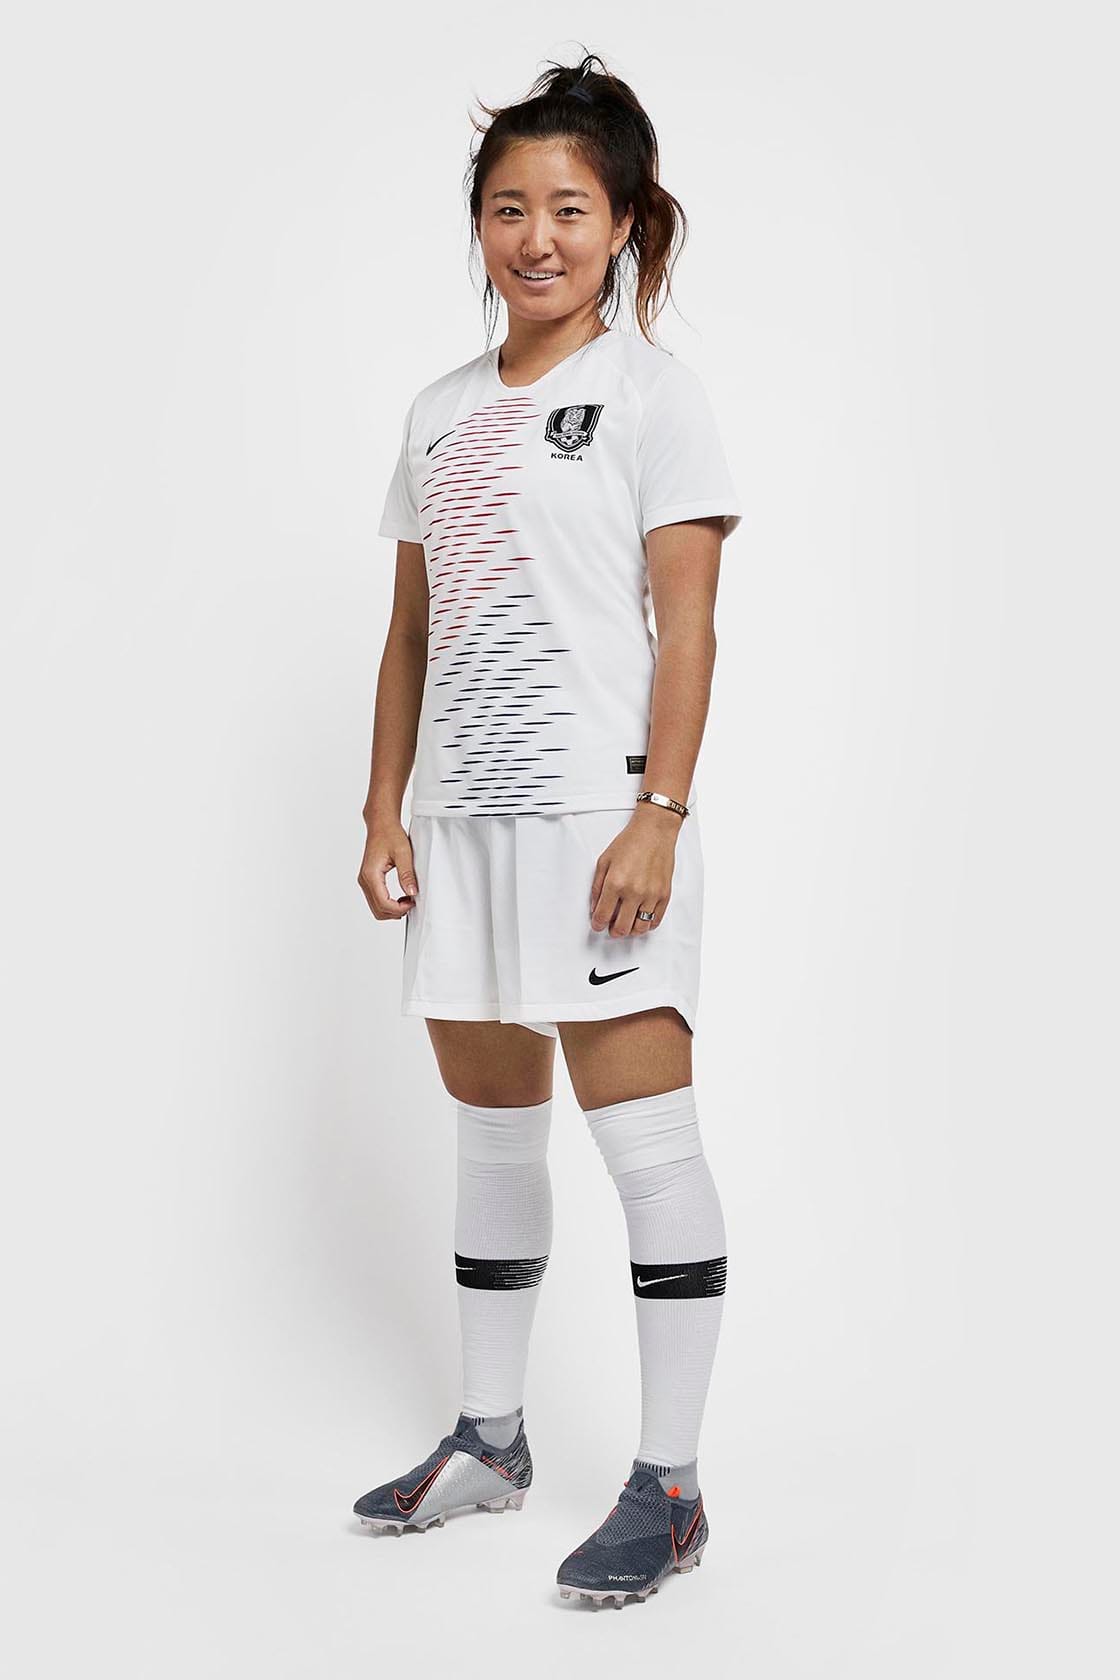 2019 women's world cup merchandise